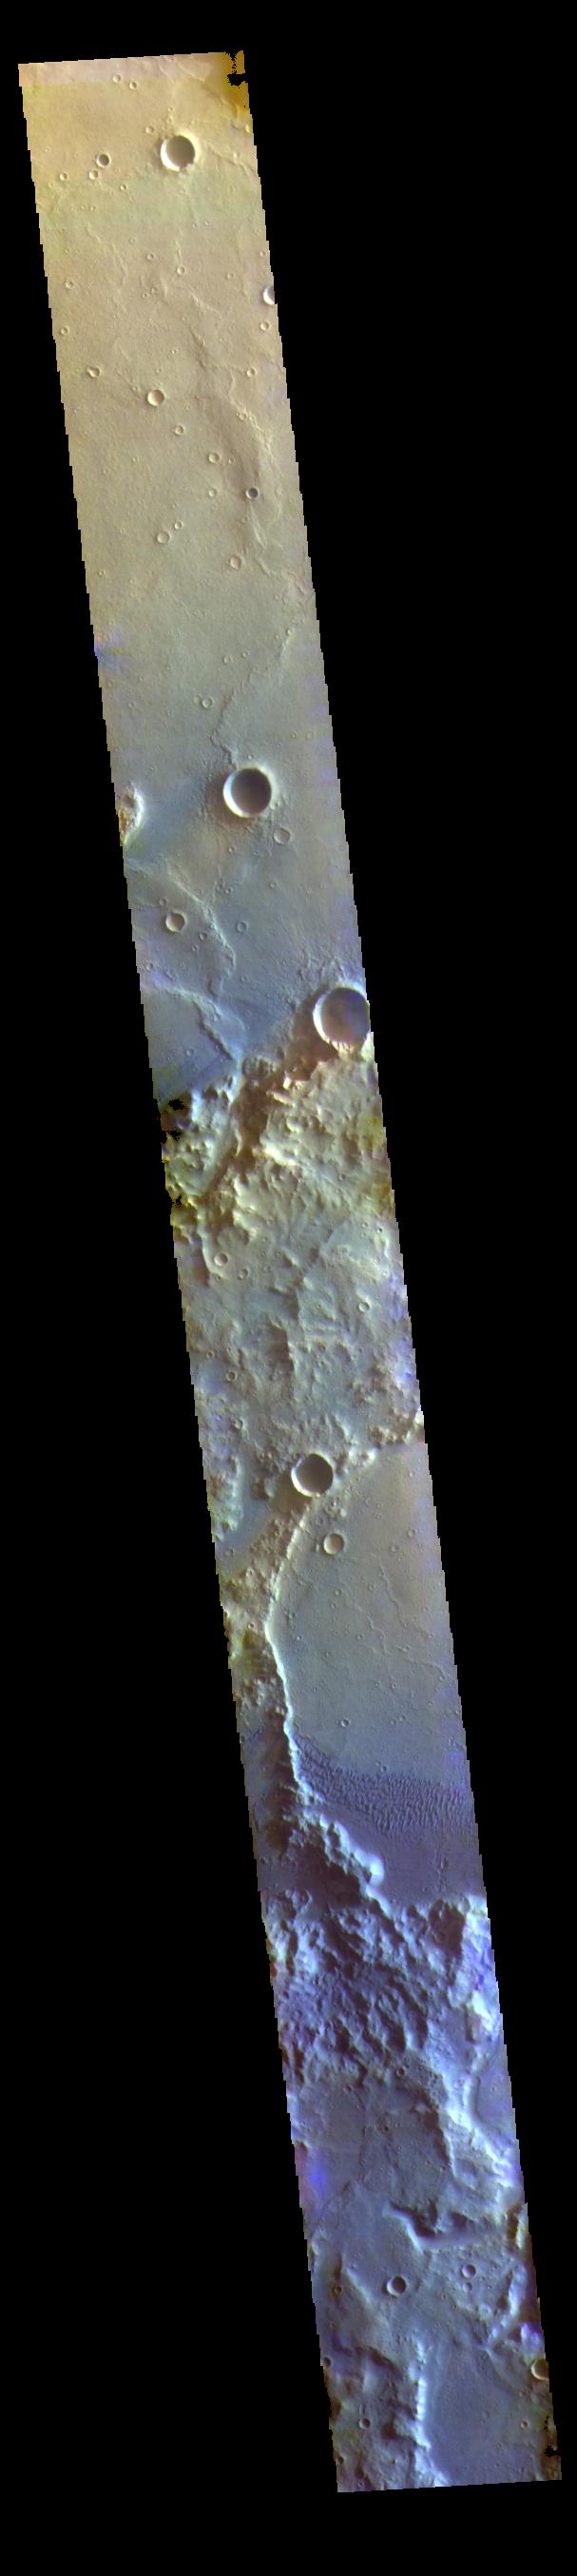 PIA24453: Terra Cimmeria Dunes - False Color